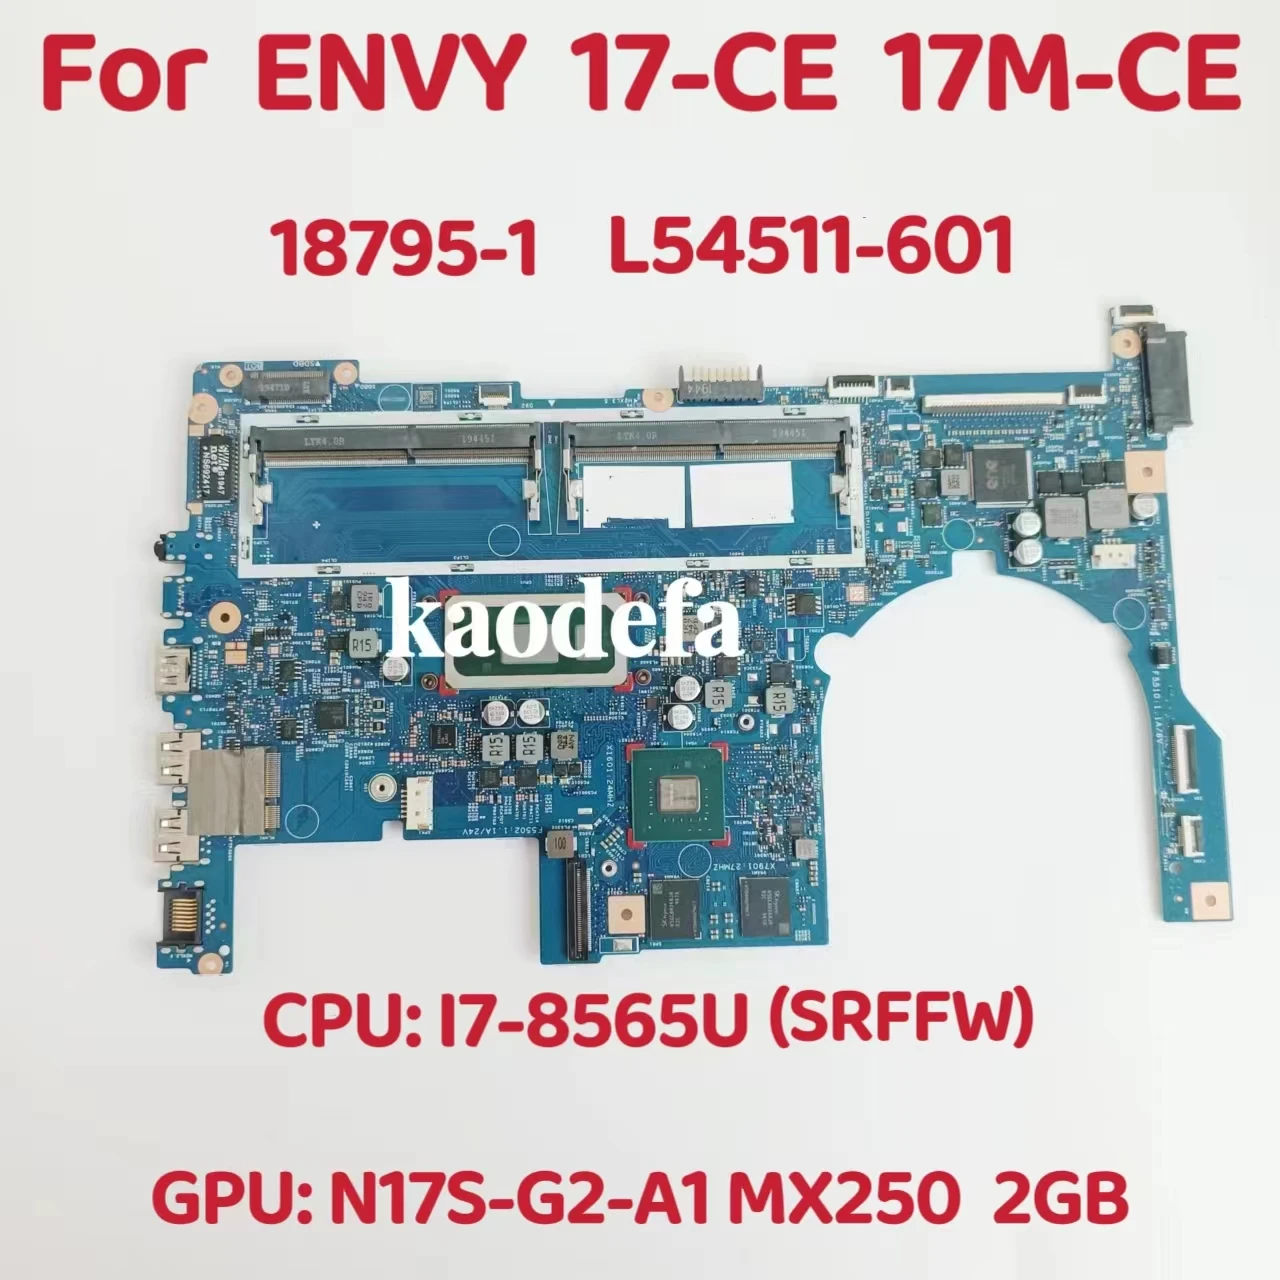 

18795-1 Mainboard For HP ENVY 17-CE 17M-CE Laptop Motherboard CPU: I7-8565U SRFFW GPU: 2GB DDR4 L54511-601 L54511-601 Test OK